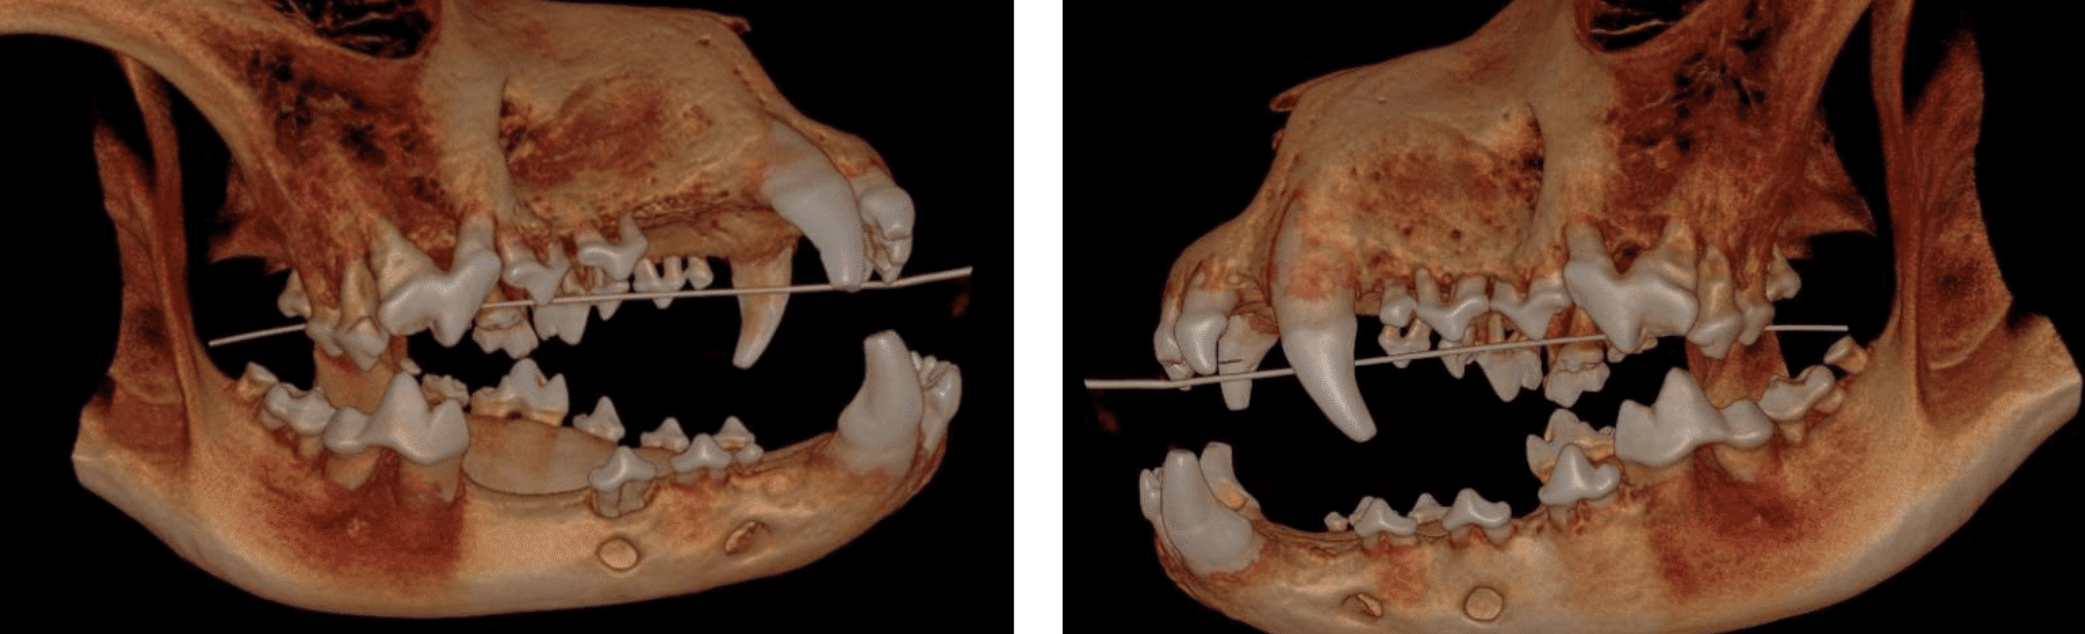 Hard tissue 3D reconstruction using CBCT